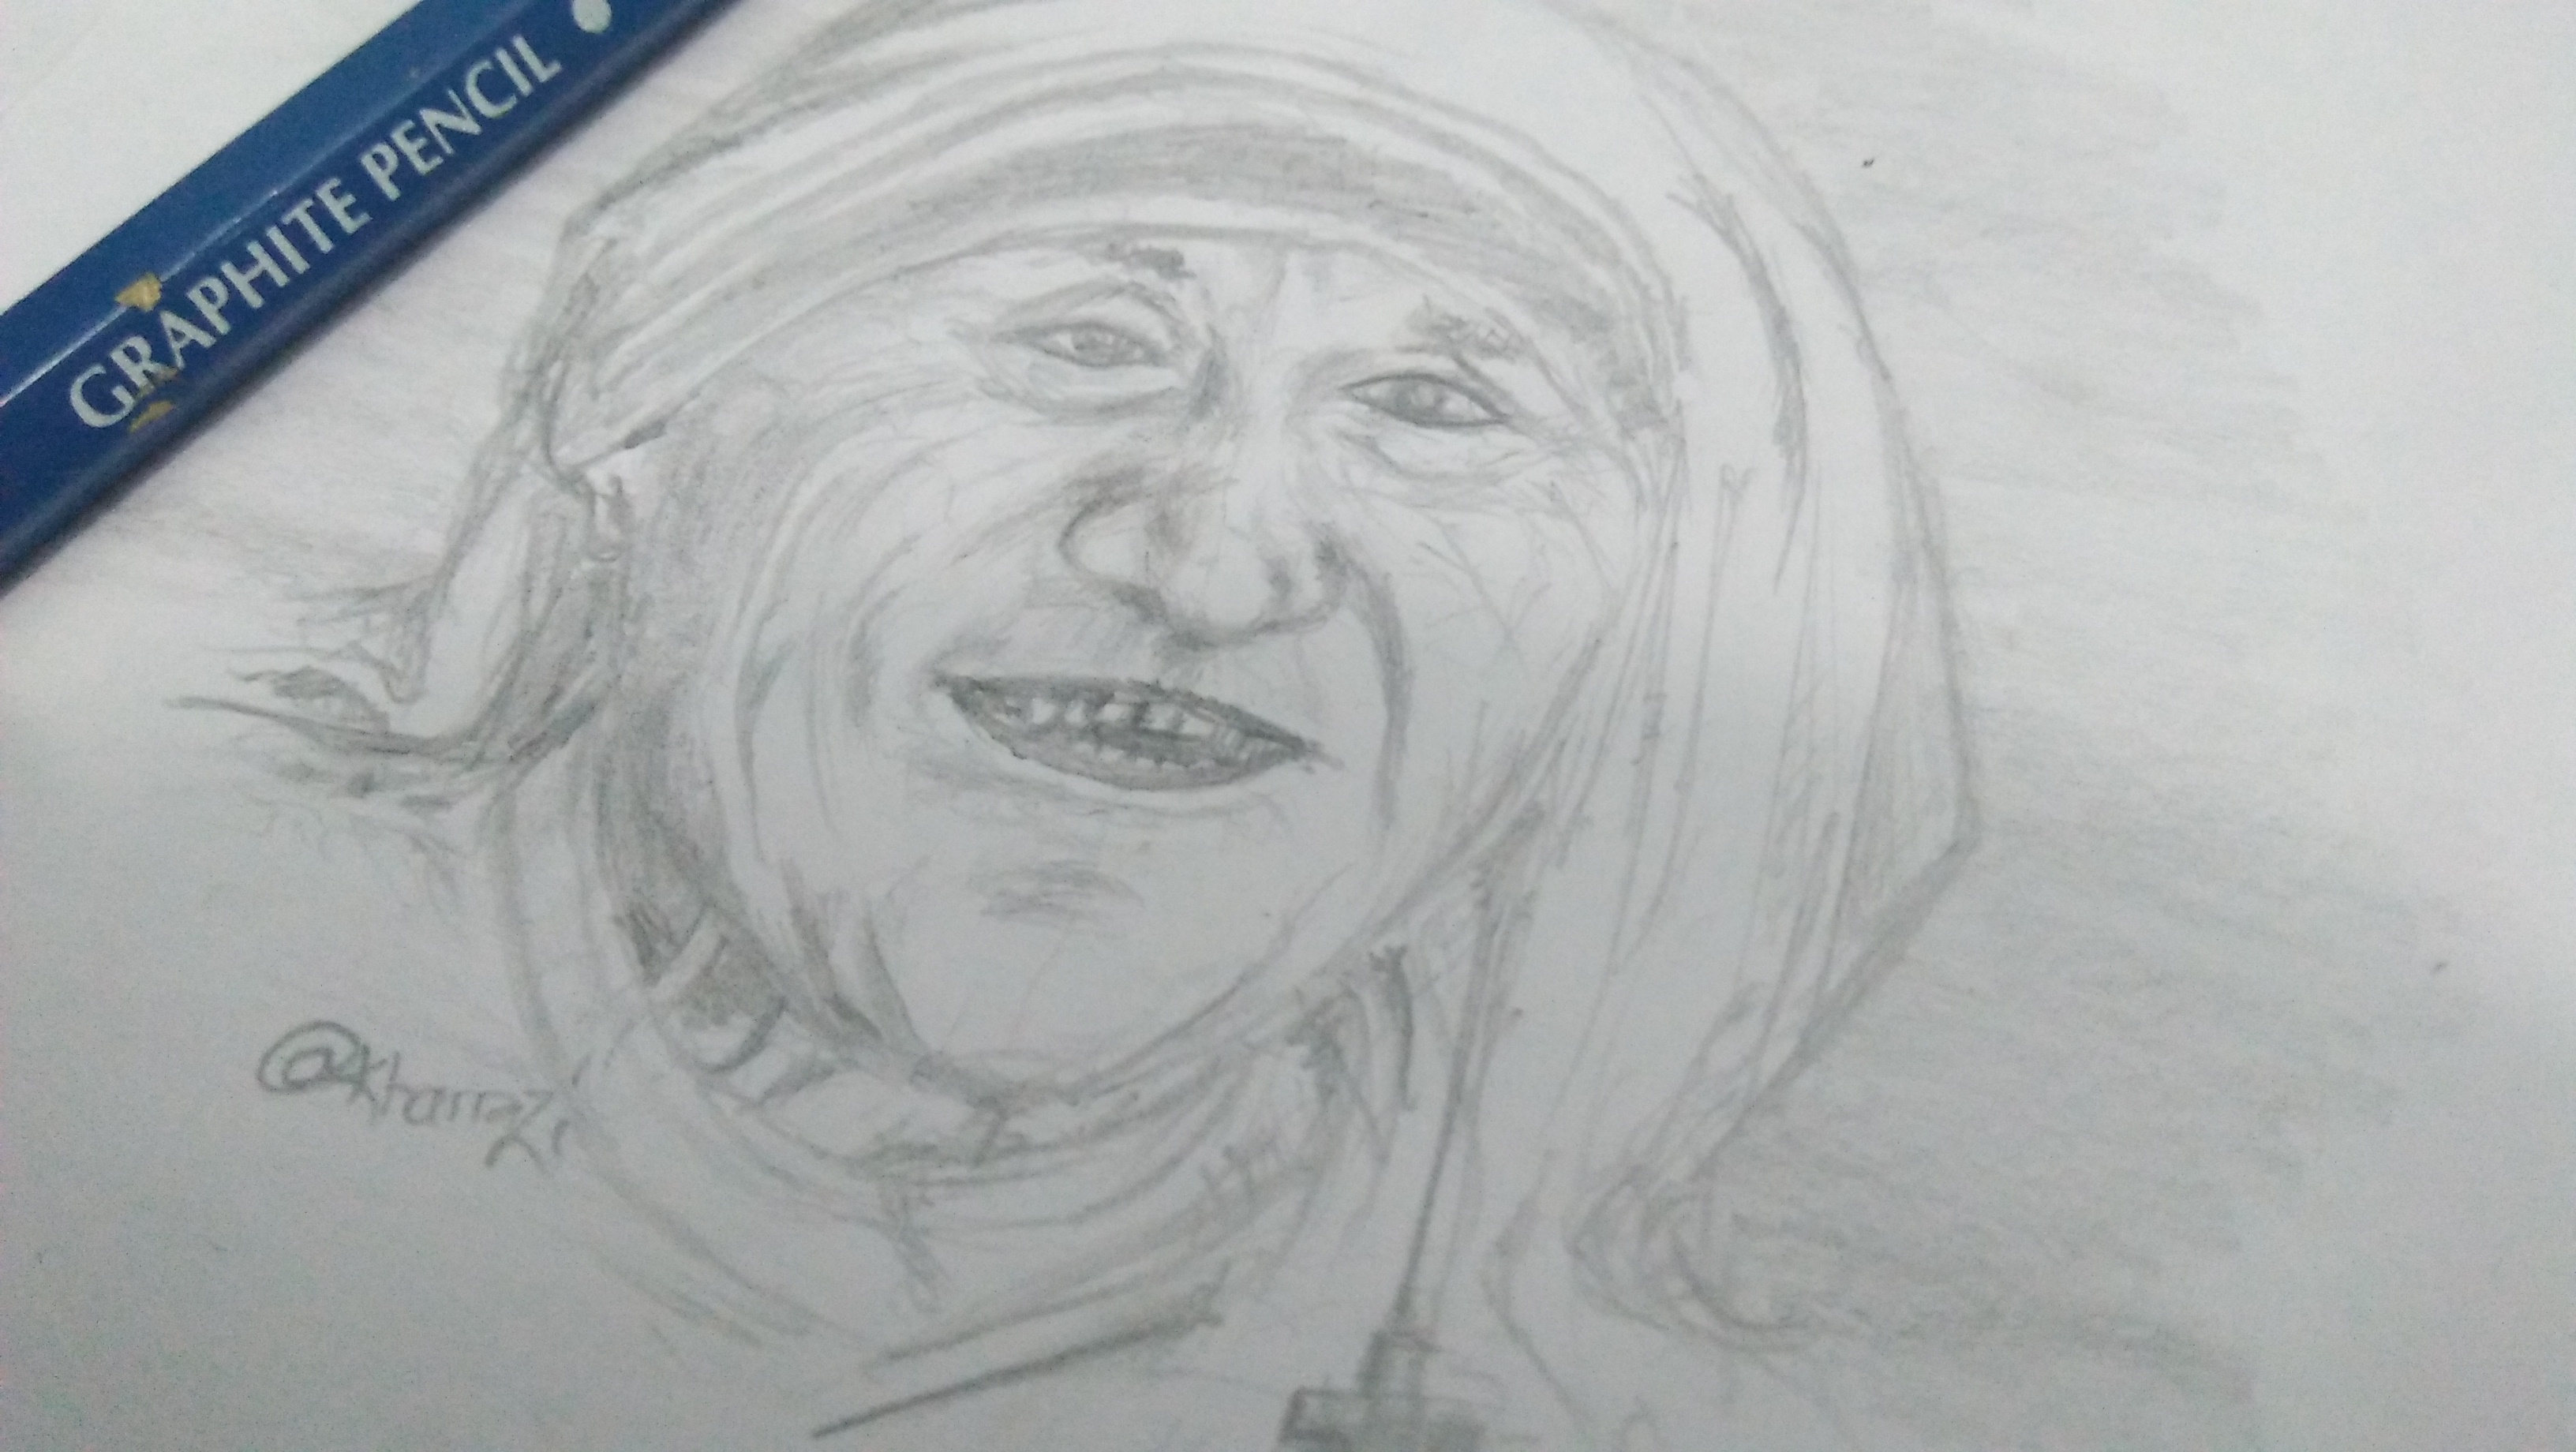 The charismatic Mother Teresa | Pratiti